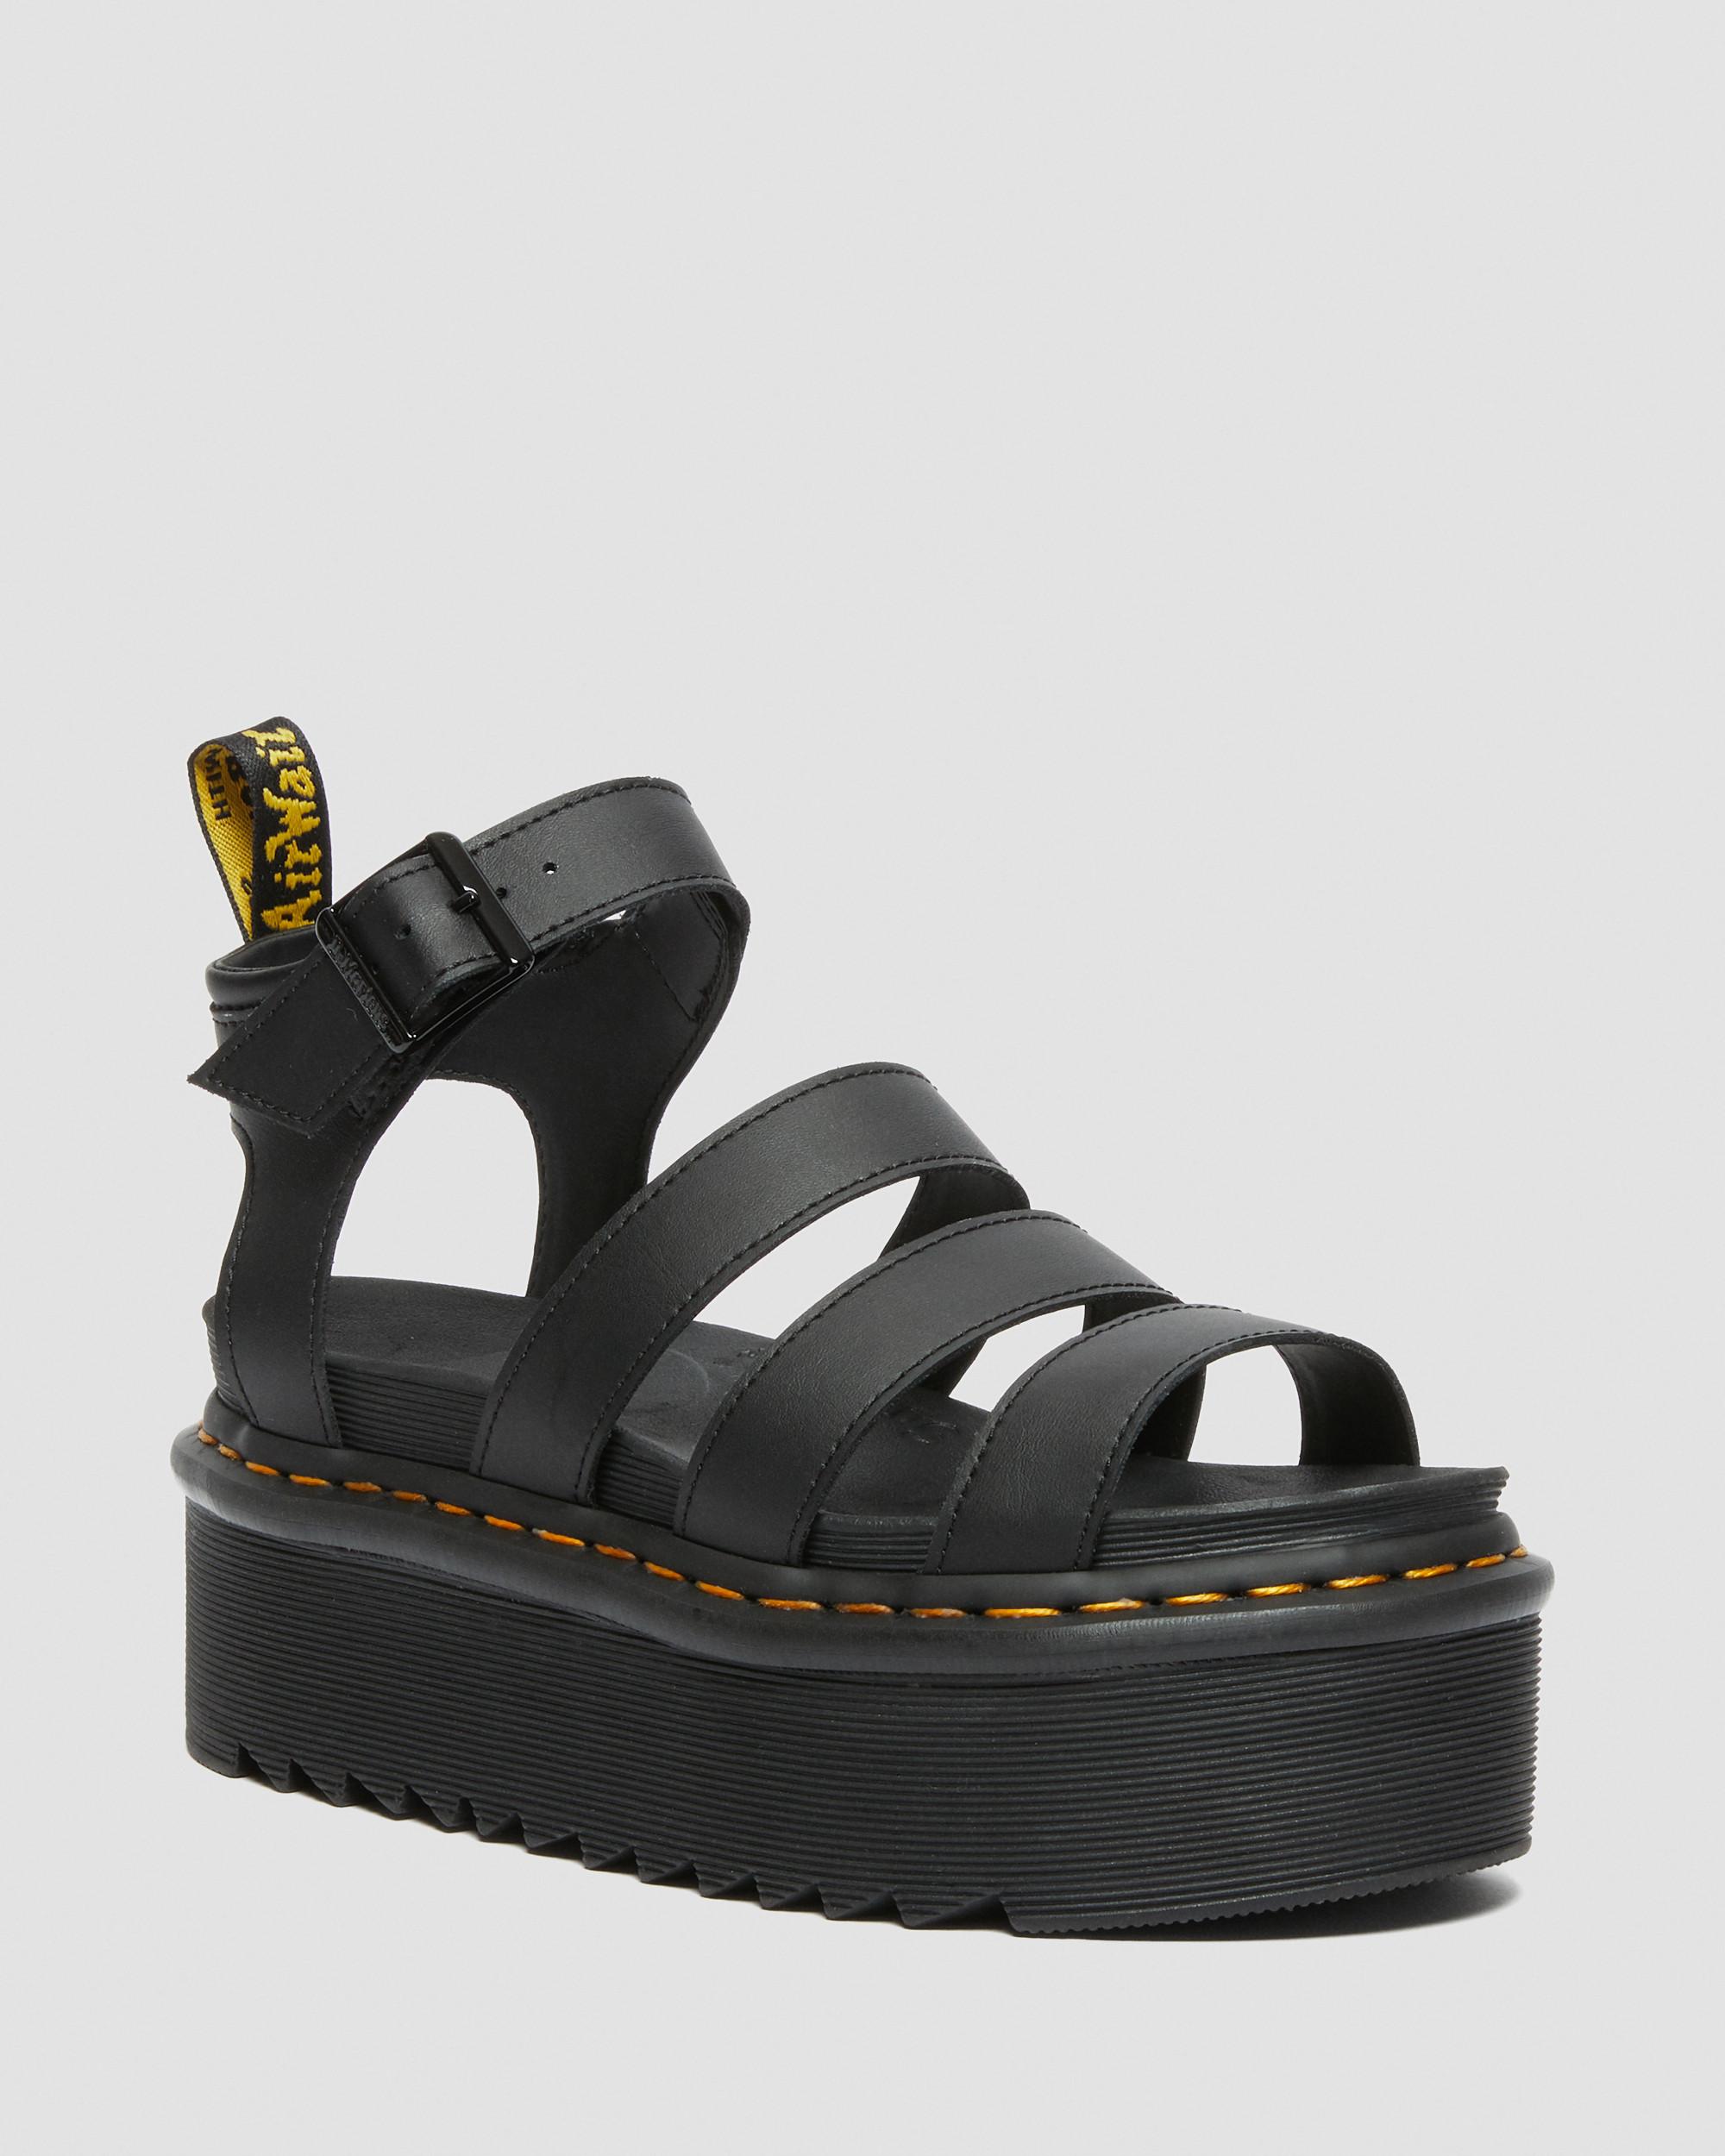 Best Chunky Heel Platform Sandals in Black and More-sgquangbinhtourist.com.vn